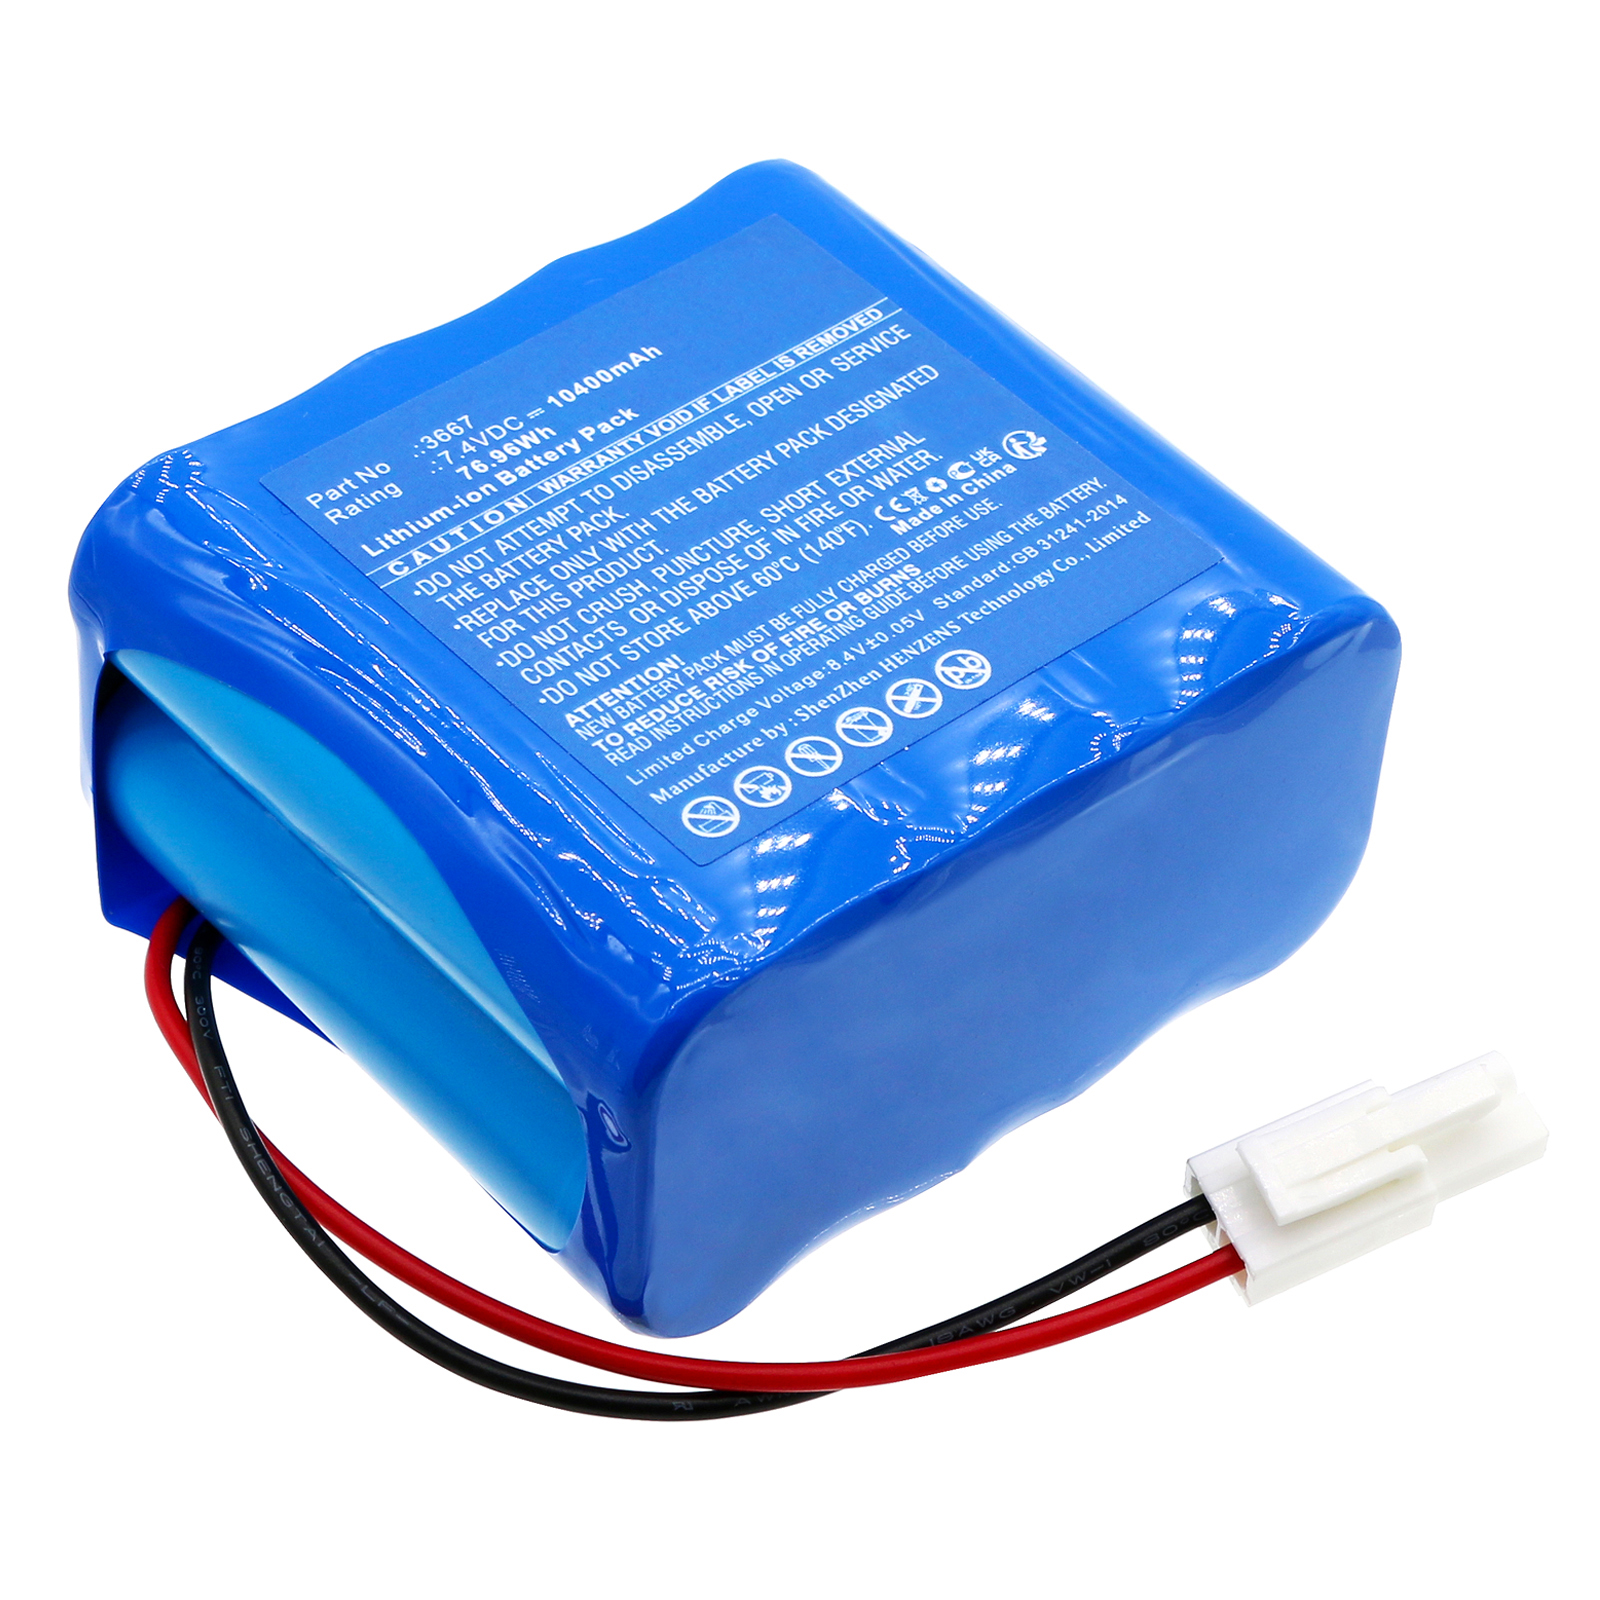 Synergy Digital Emergency Lighting Battery, Compatible with DOTLUX 3667 Emergency Lighting Battery (Li-ion, 7.4V, 10400mAh)